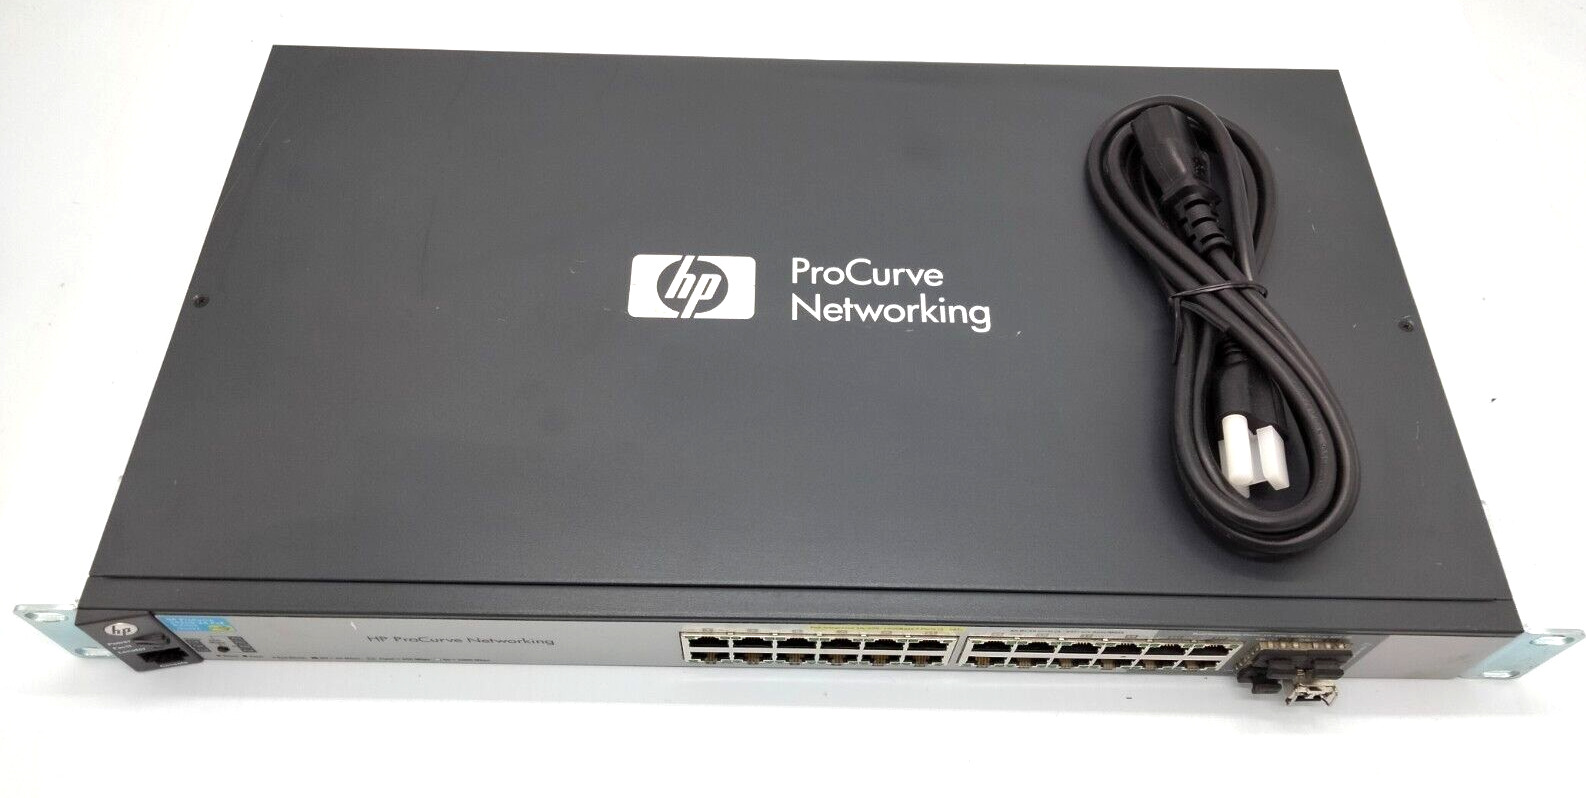 HP ProCurve J9299A 2520G-24-PoE 24 Port PoE Gigabit Switch power cord included